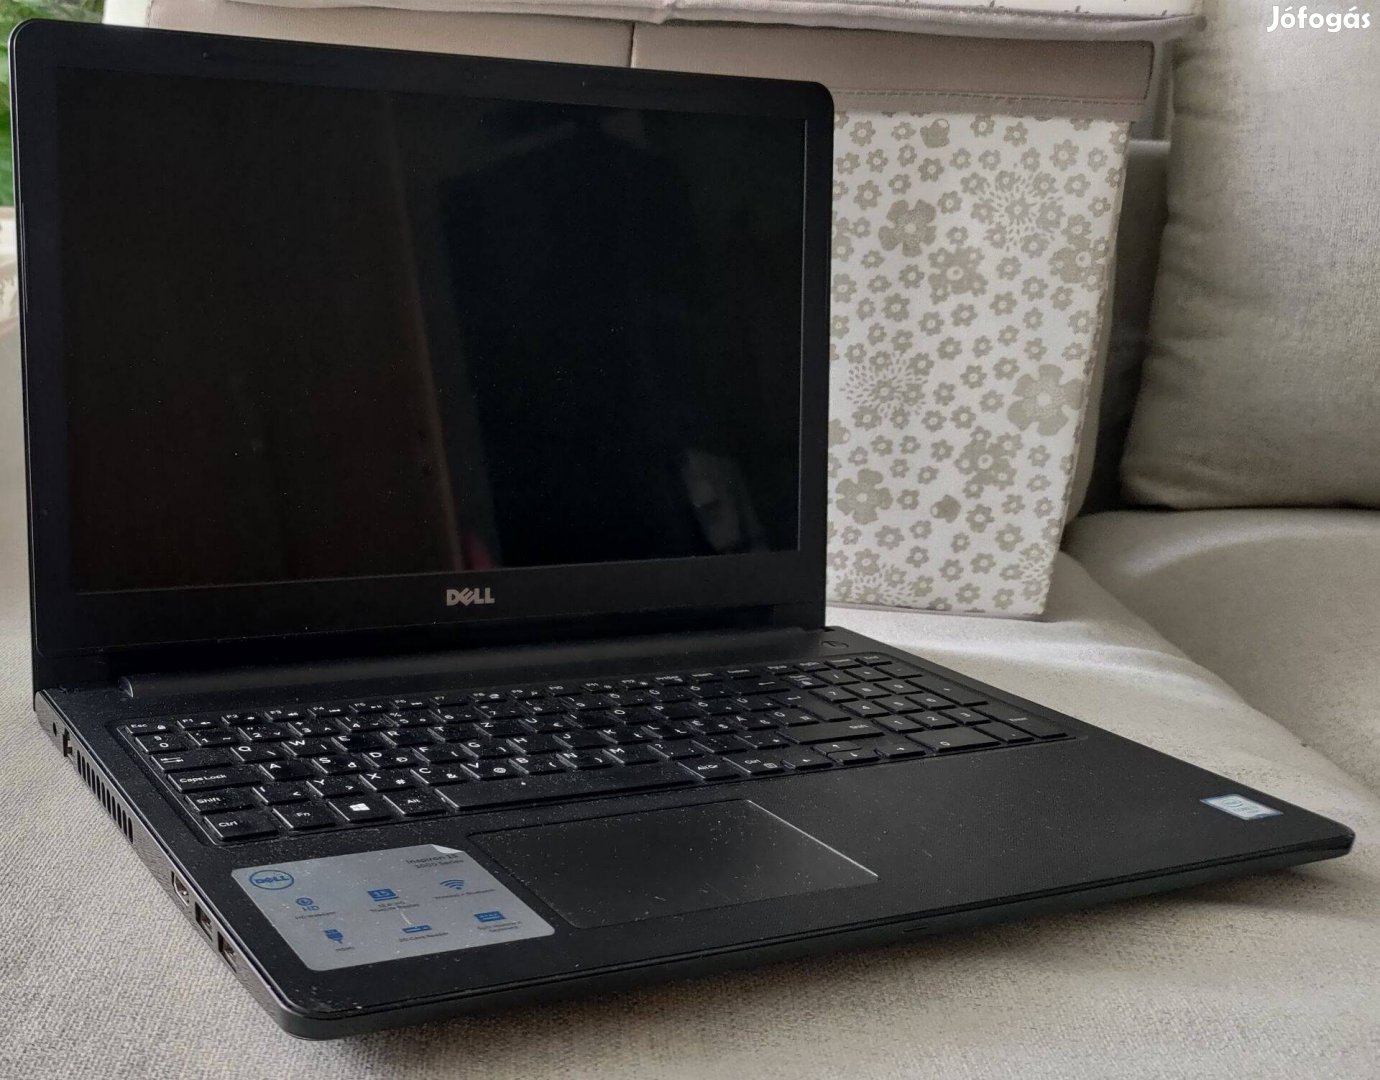 Dell Inspiron 15 3000 laptop